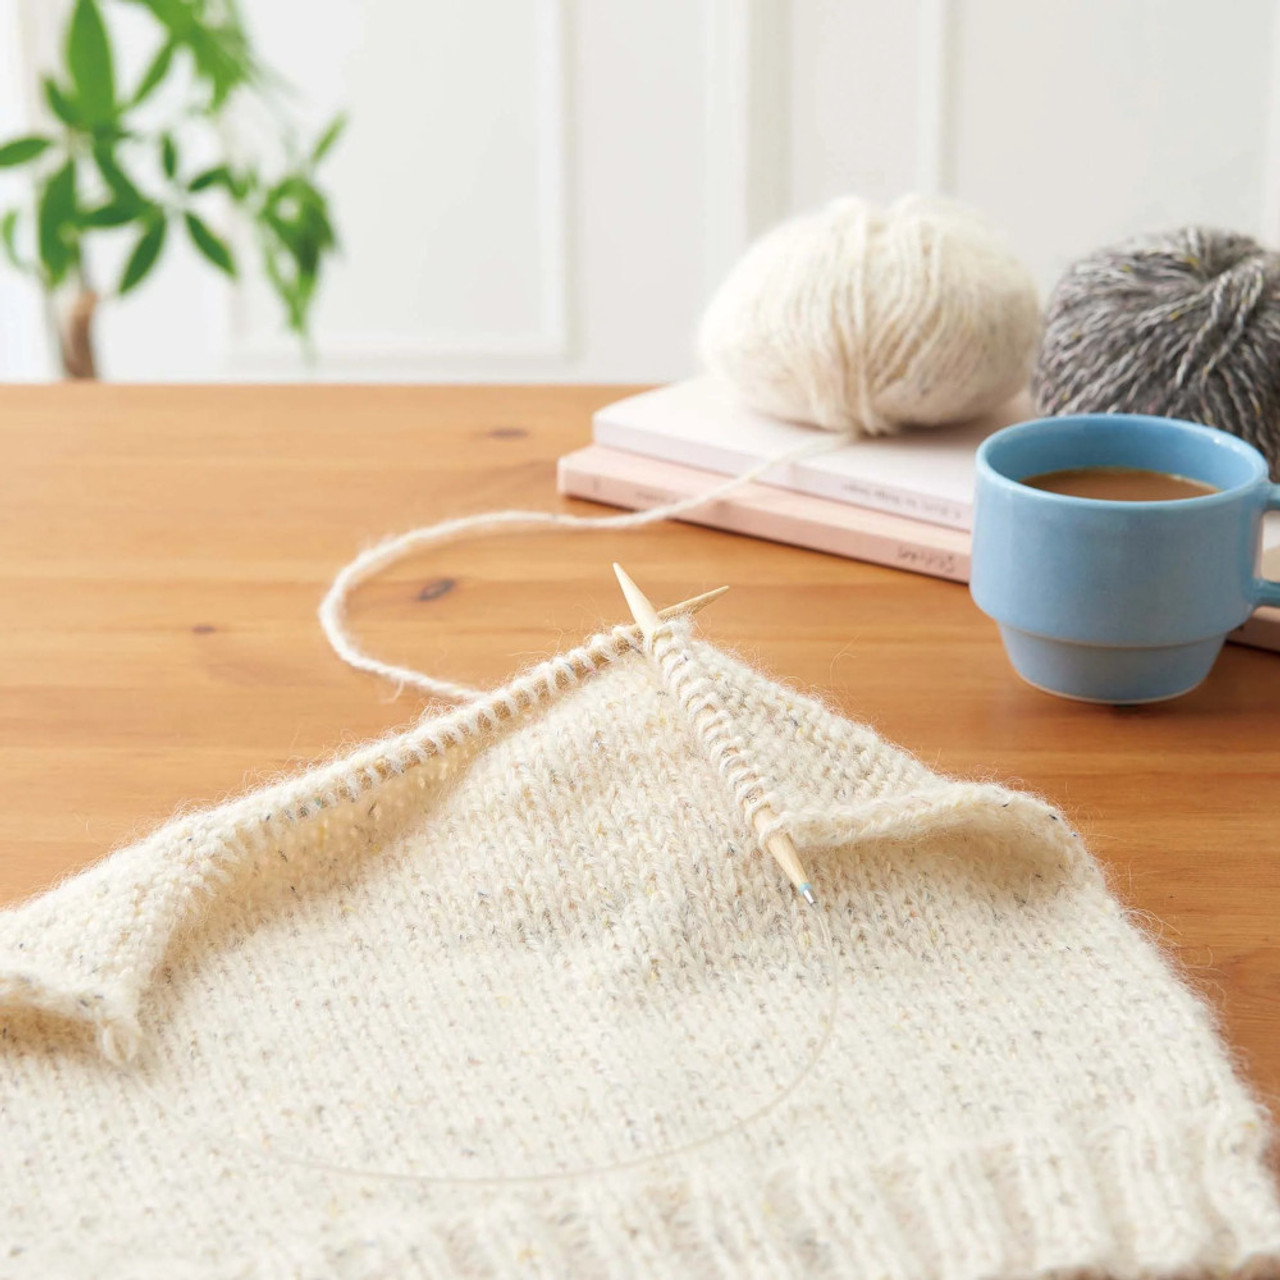 Clover Bamboo Takumi Circular Knitting Needles 16 inch, Size 11